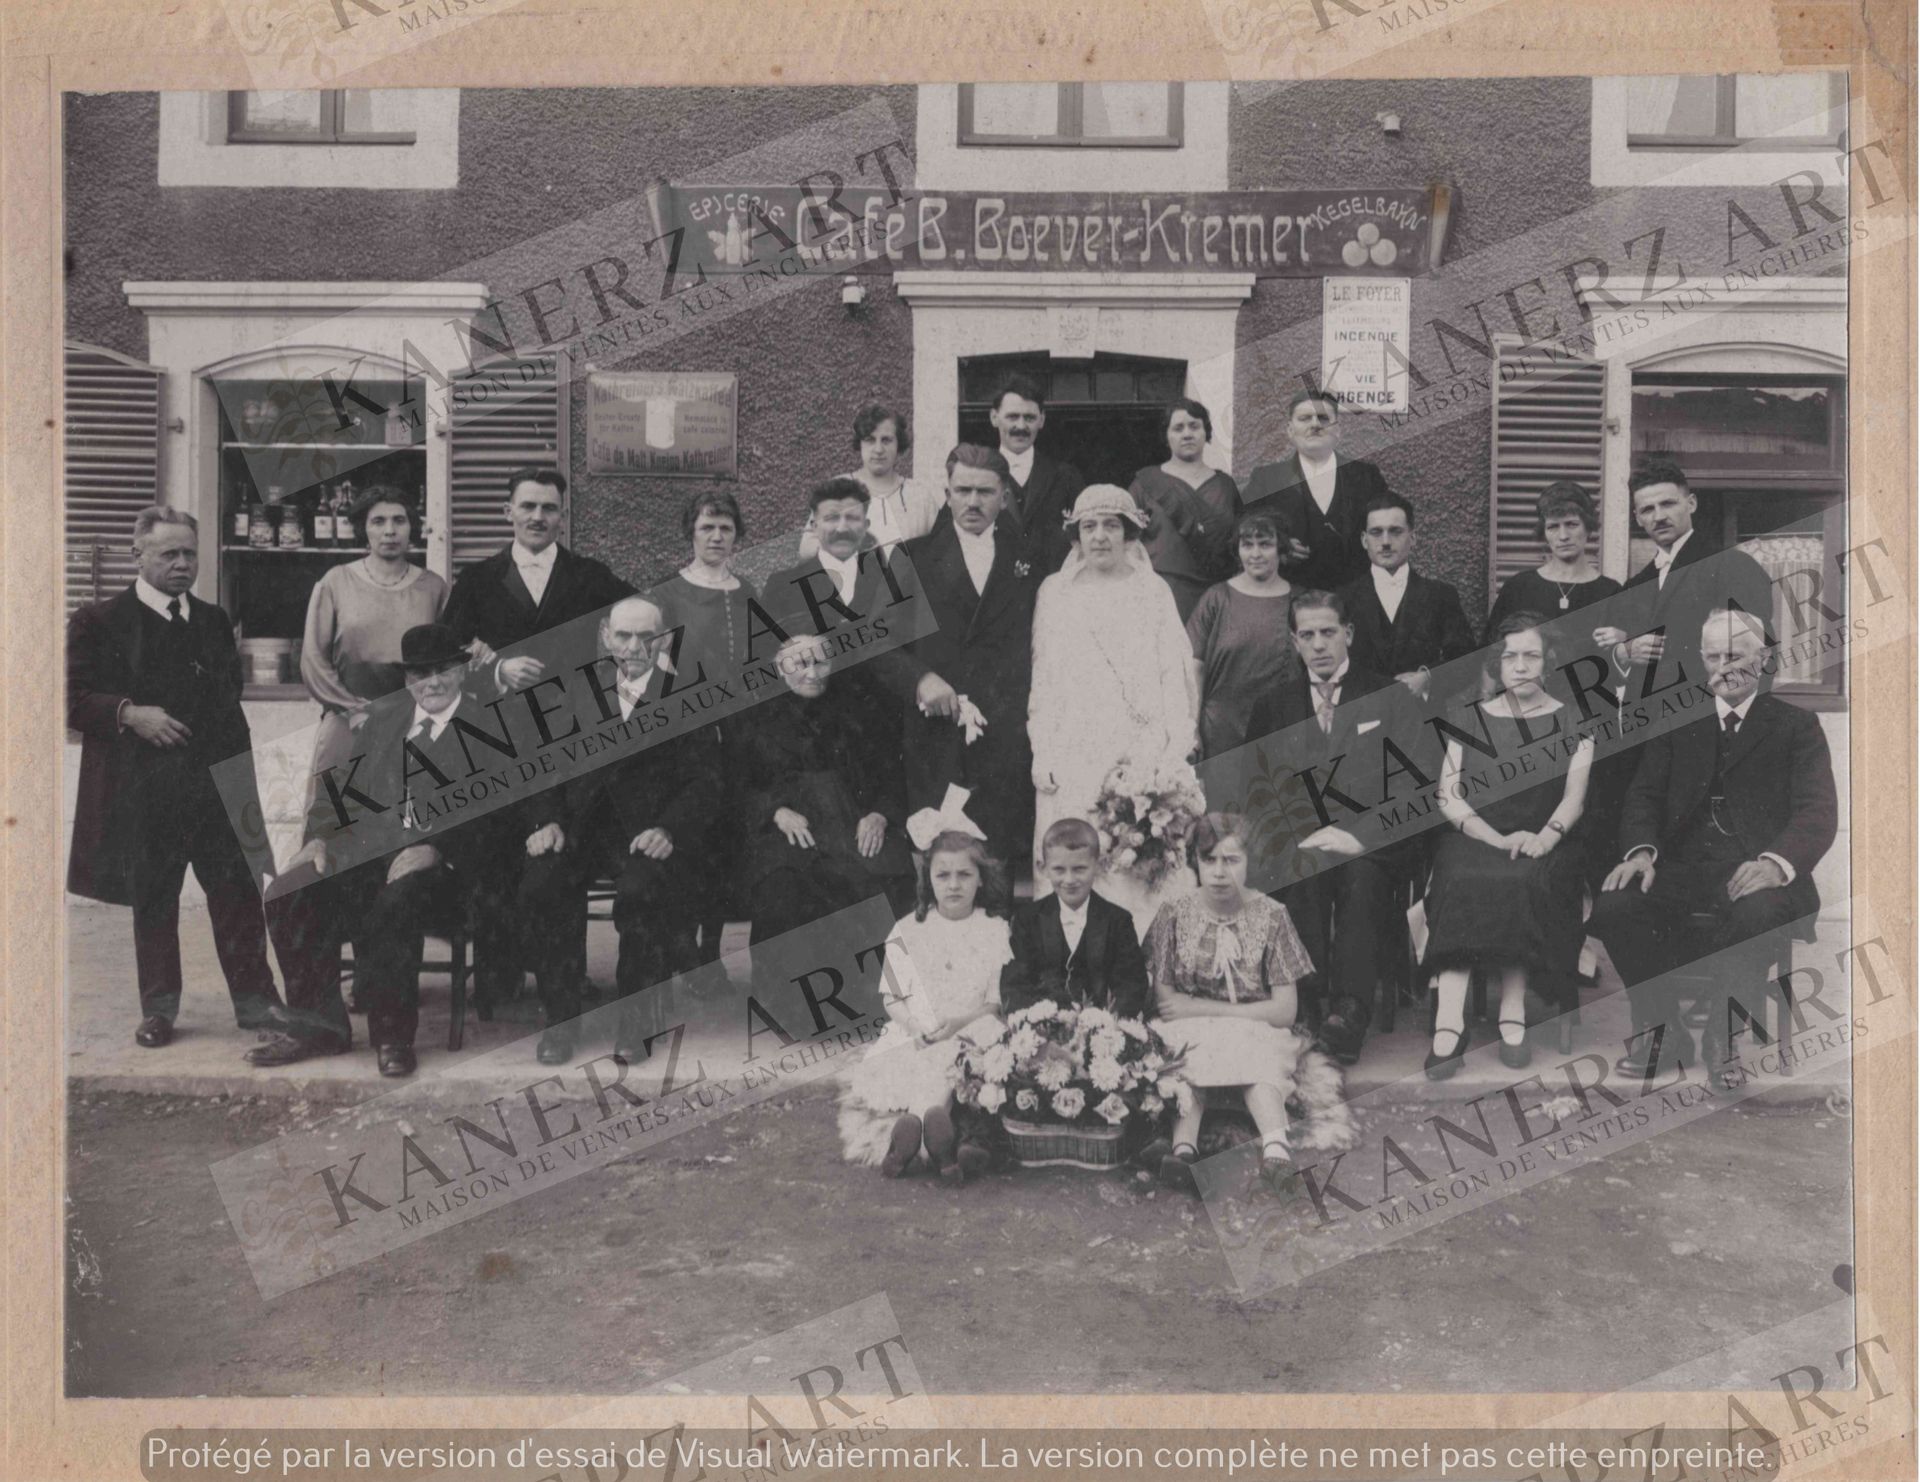 Null (CAFE)在Café-Epicerie-Assurance B前面的婚礼的漂亮照片。BOEVER-KREMER，墙上的广告板，约1910年，17 x&hellip;